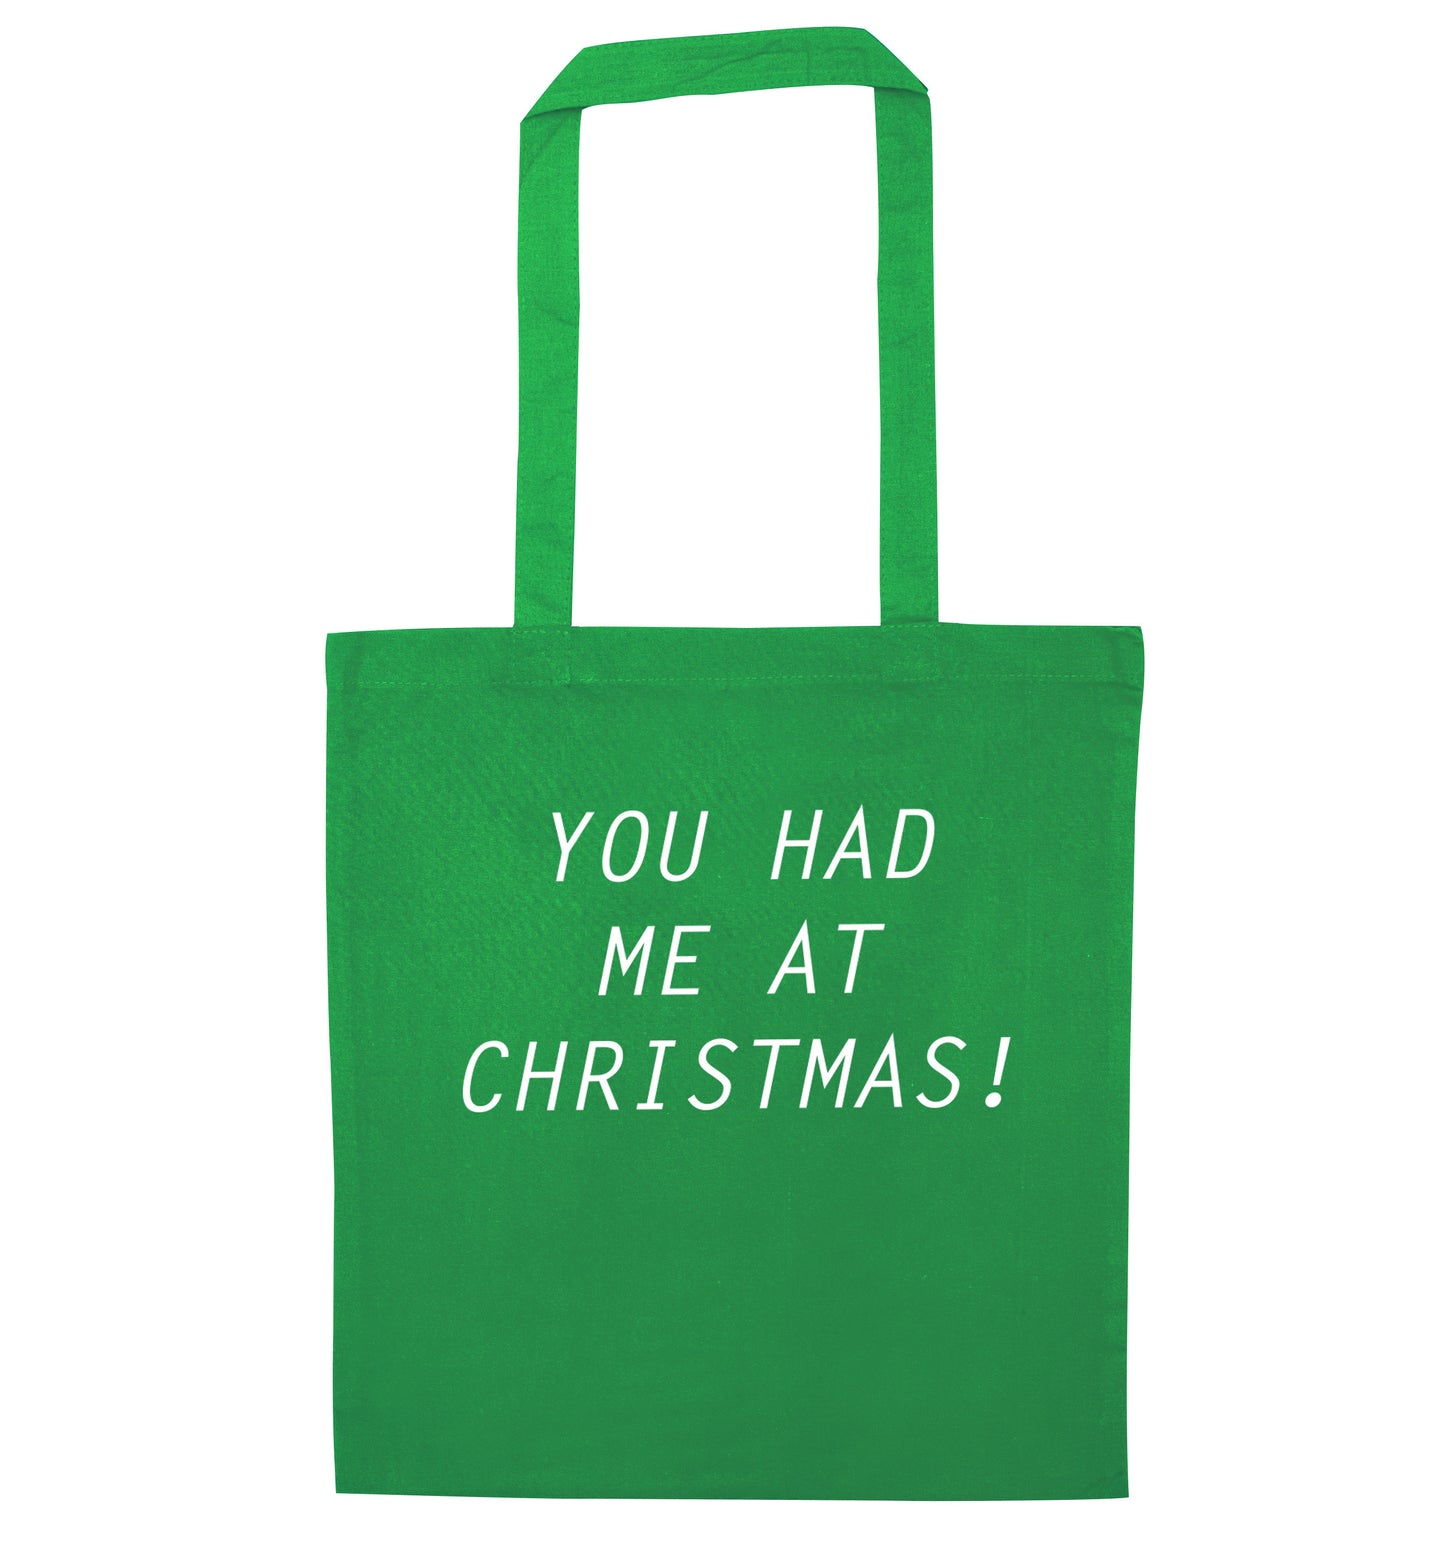 You had me at Christmas green tote bag